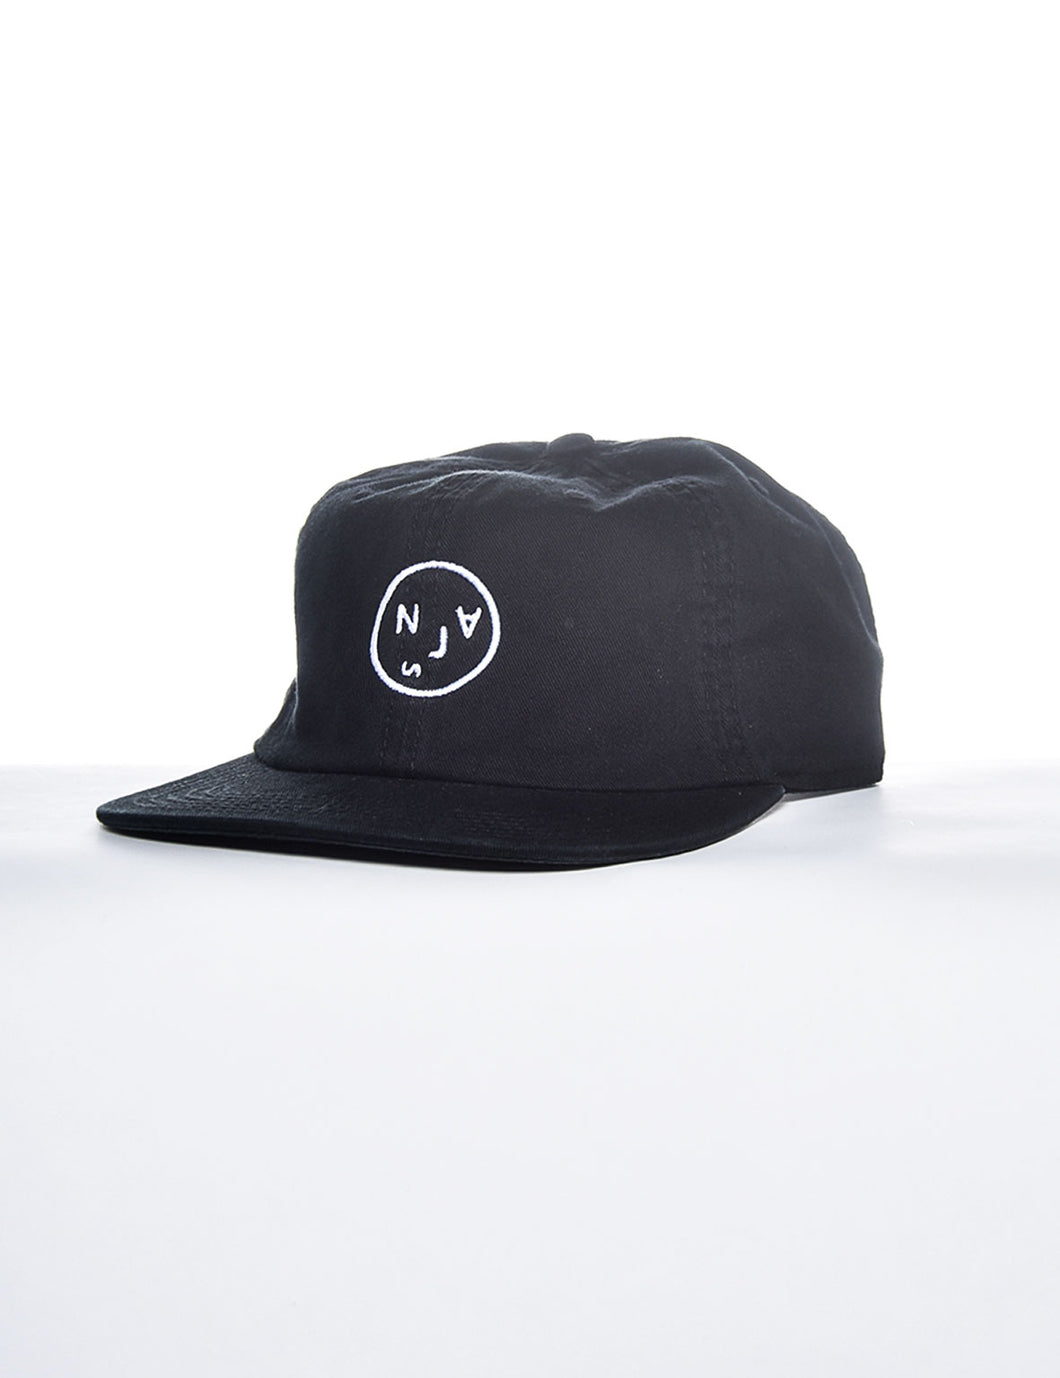 NAJS ”FACE” CAP (WASHED BLACK)